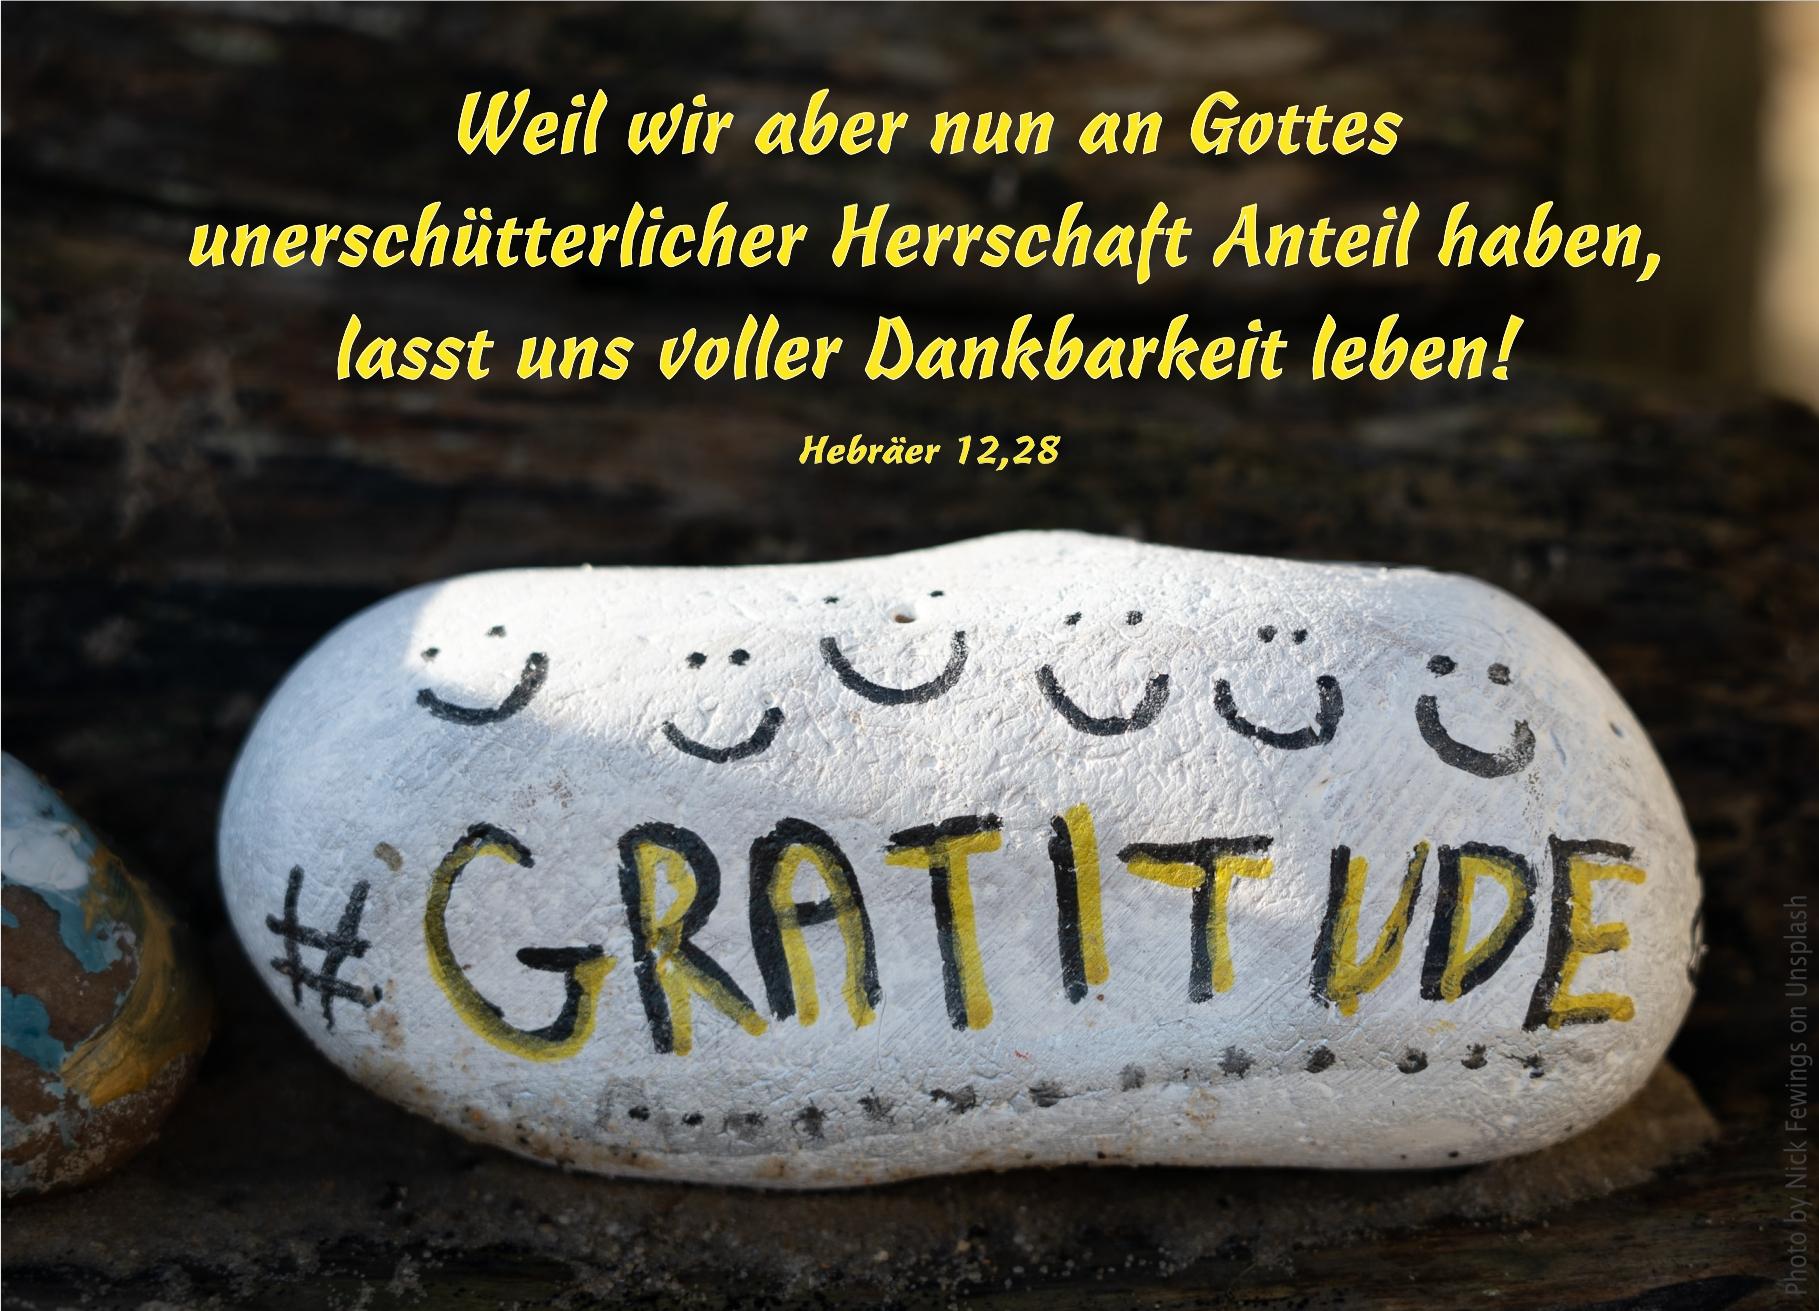 alt="stein_mit_aufschrift_gratitude_erwartet_bibelhoerbuch_gottes_festversammlung"